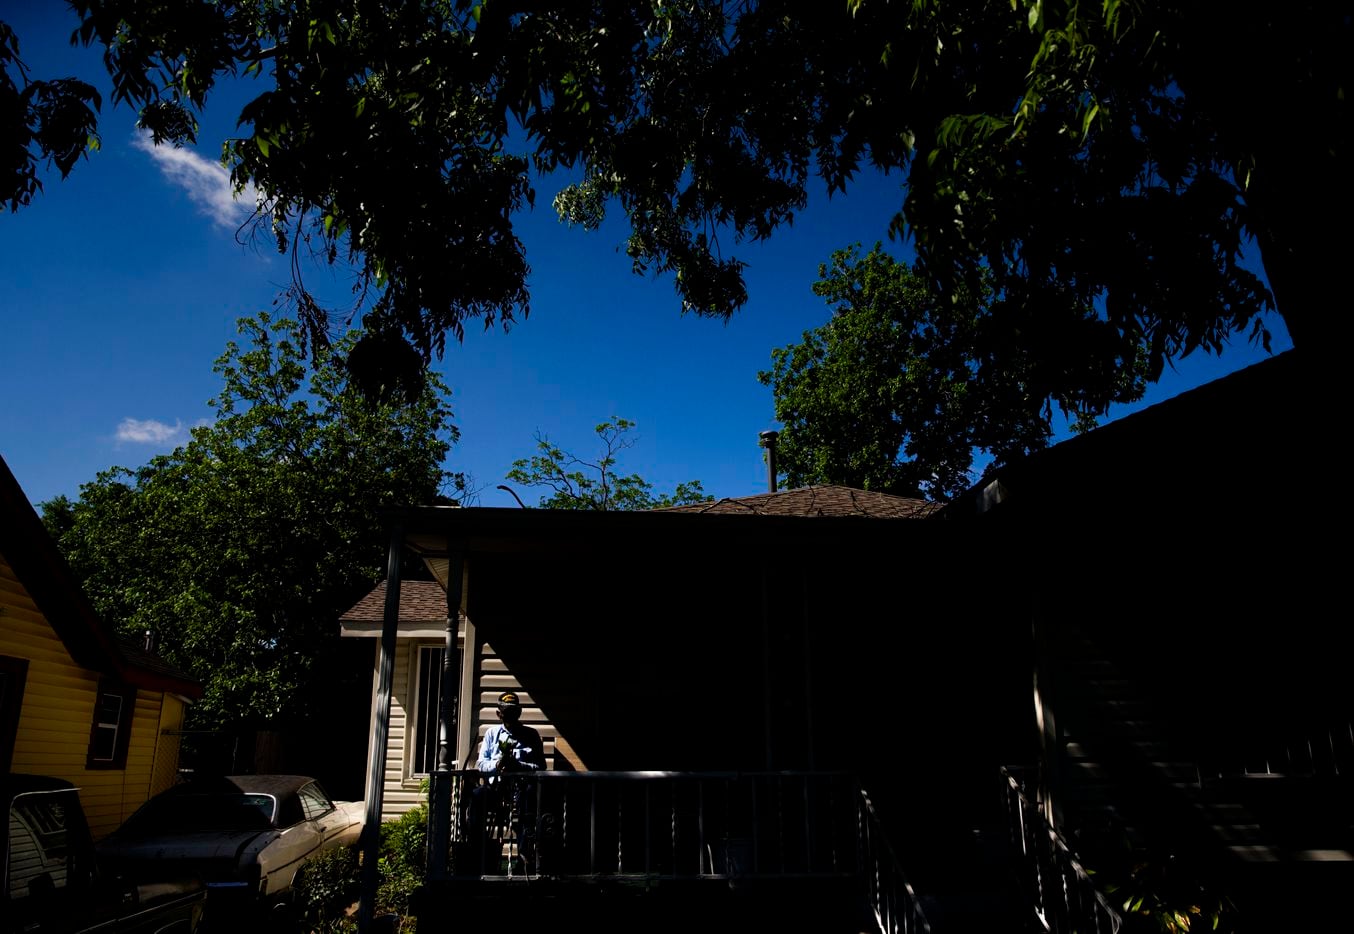 U.S. Army veteran Richard Overton, 111, sits on the front porch smoking a cigar at 10:38...